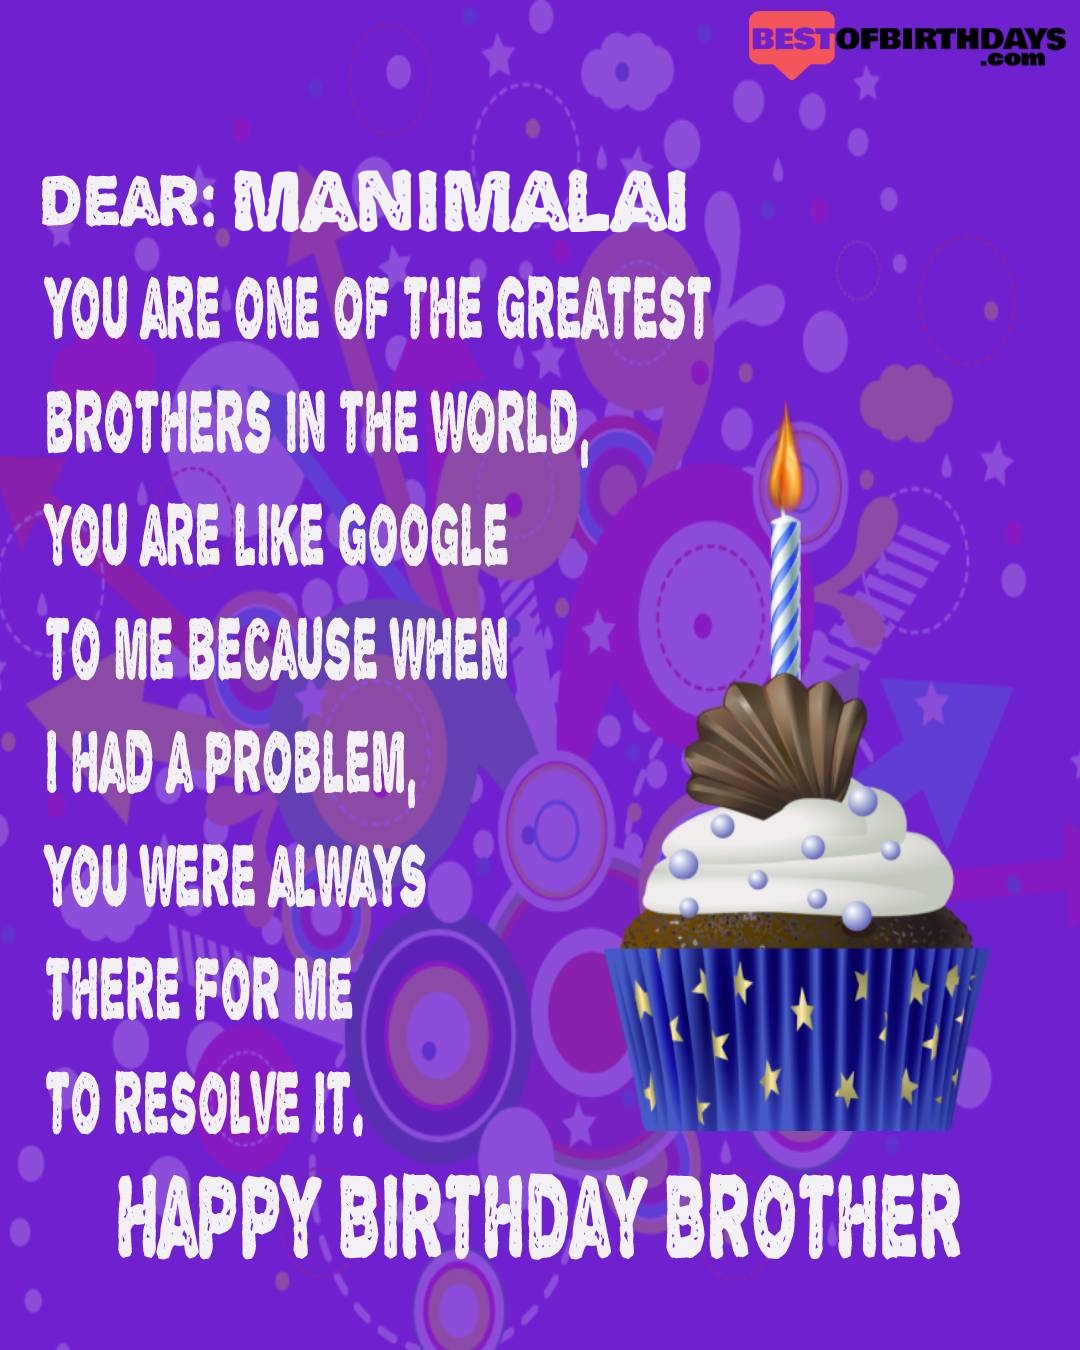 Happy birthday manimalai bhai brother bro